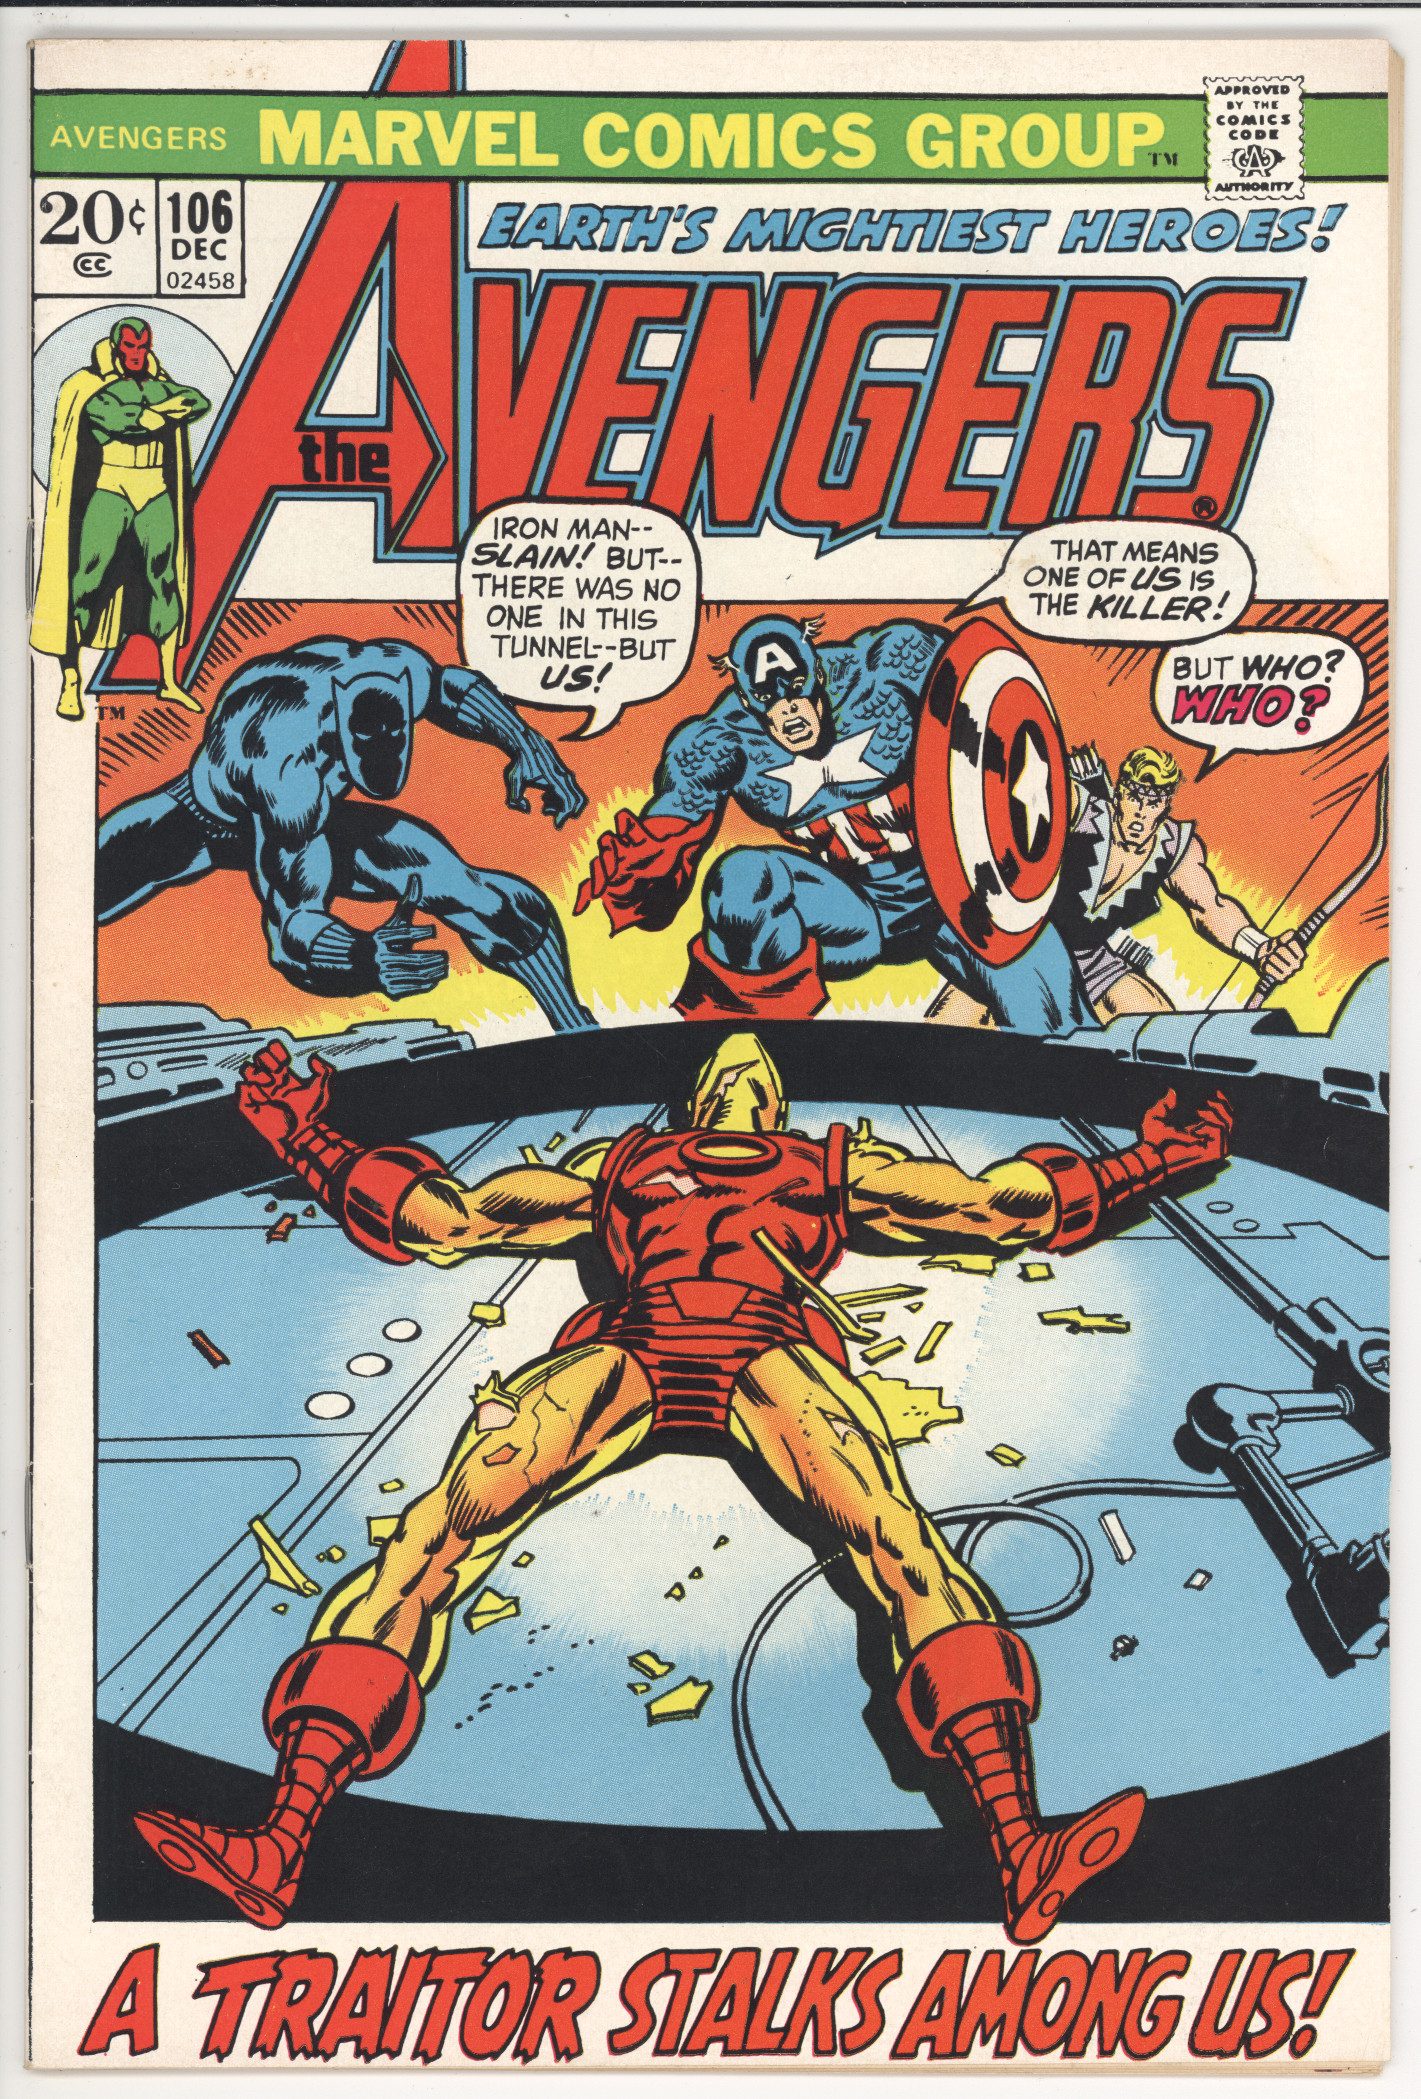 Avengers #106 front